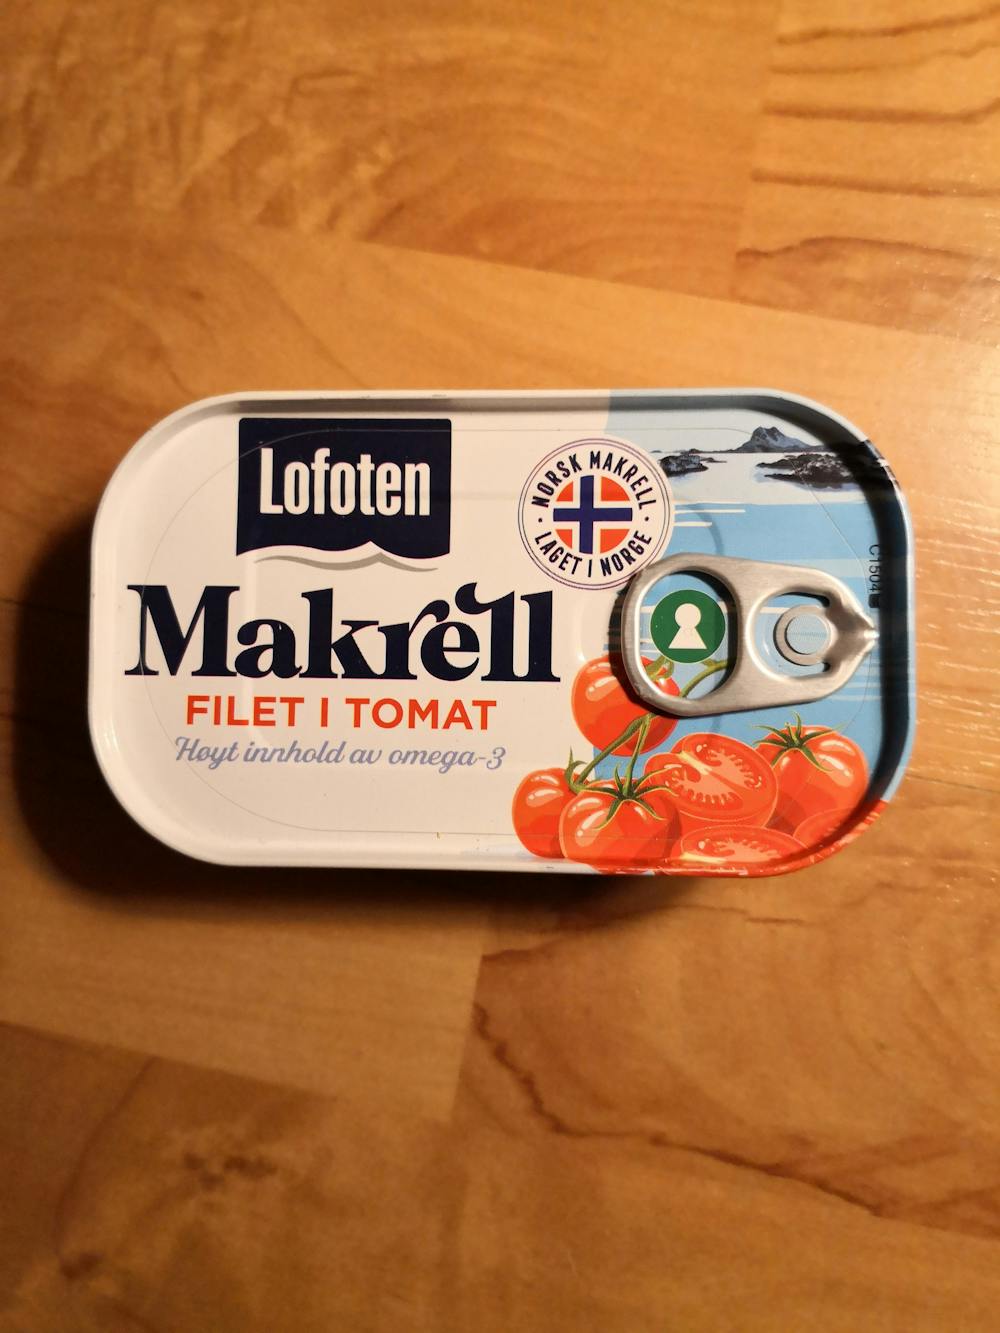 Makrell filet i tomat, Lofoten